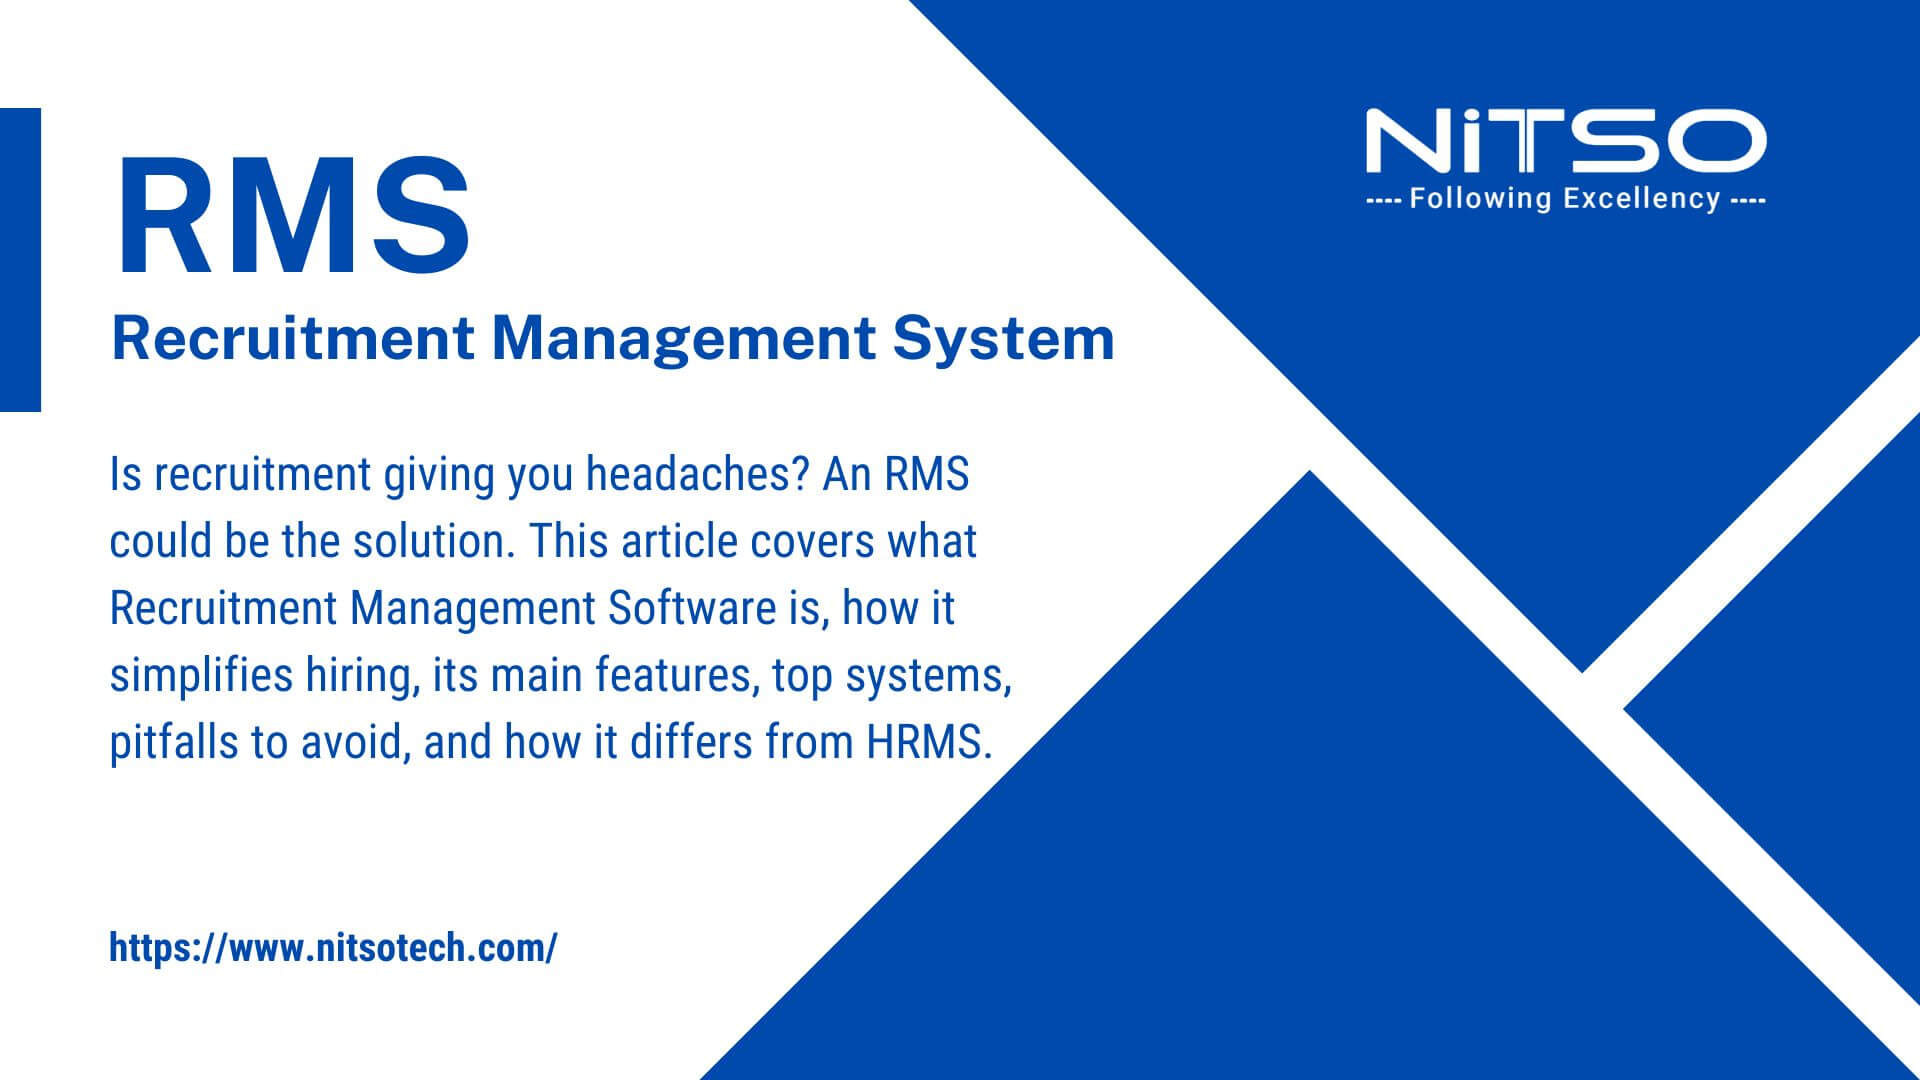 Recruitment Management System (RMS)